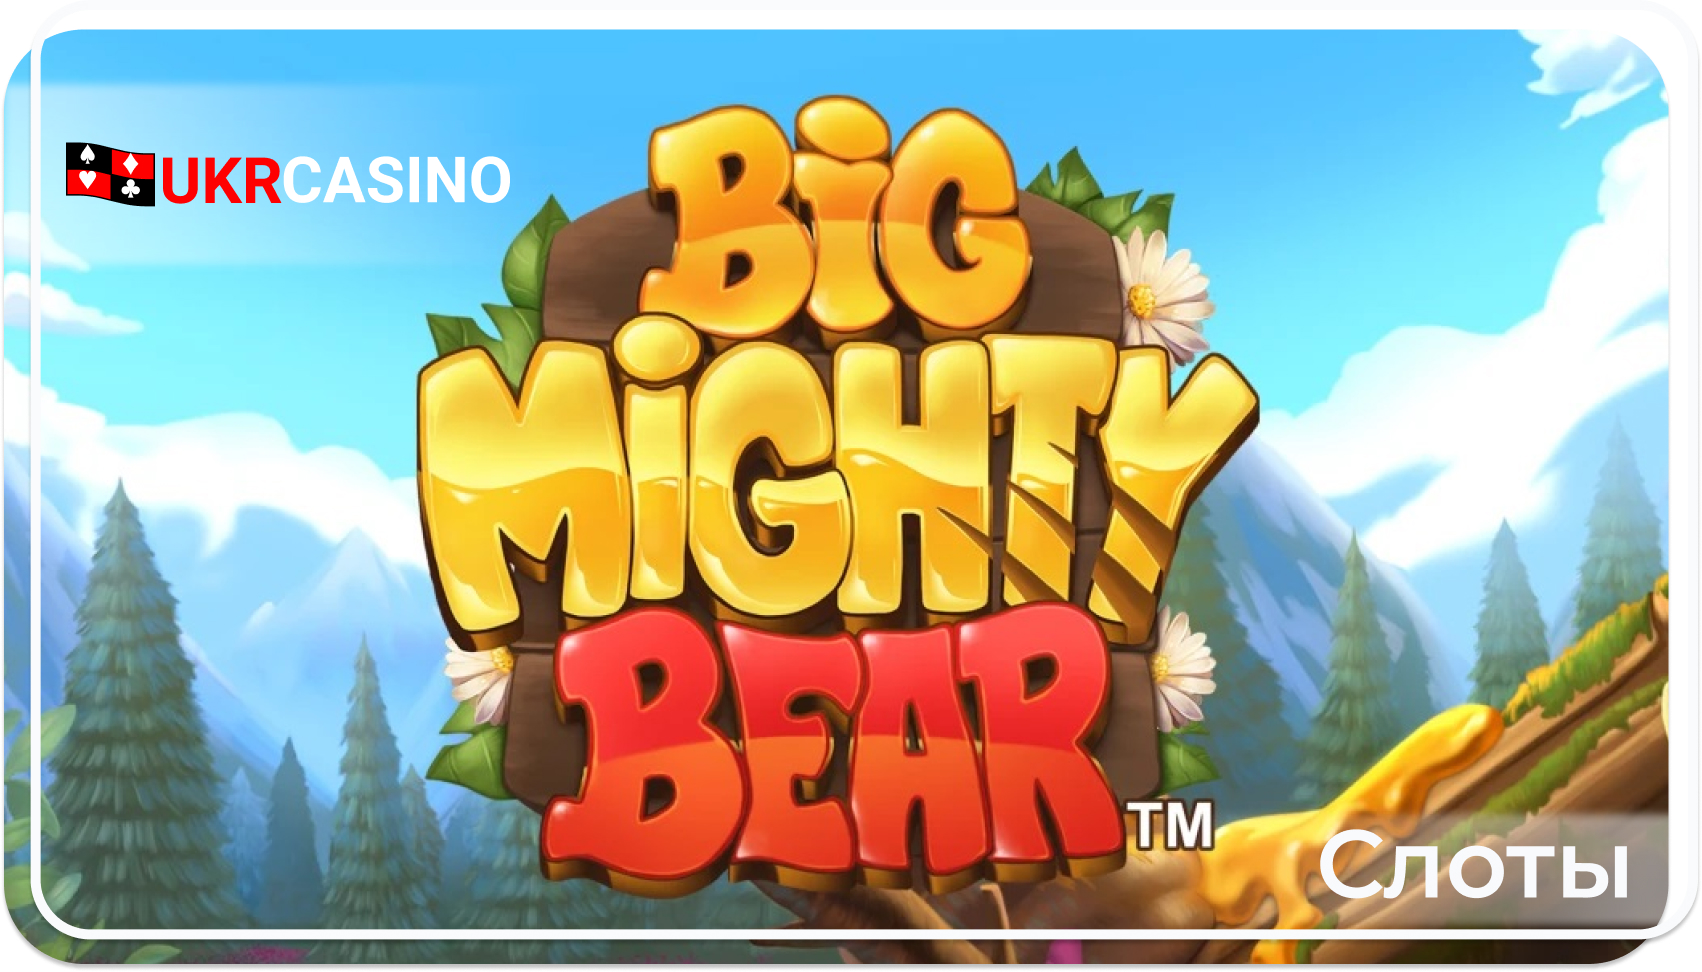 Big Mighty Bear - Microgaming